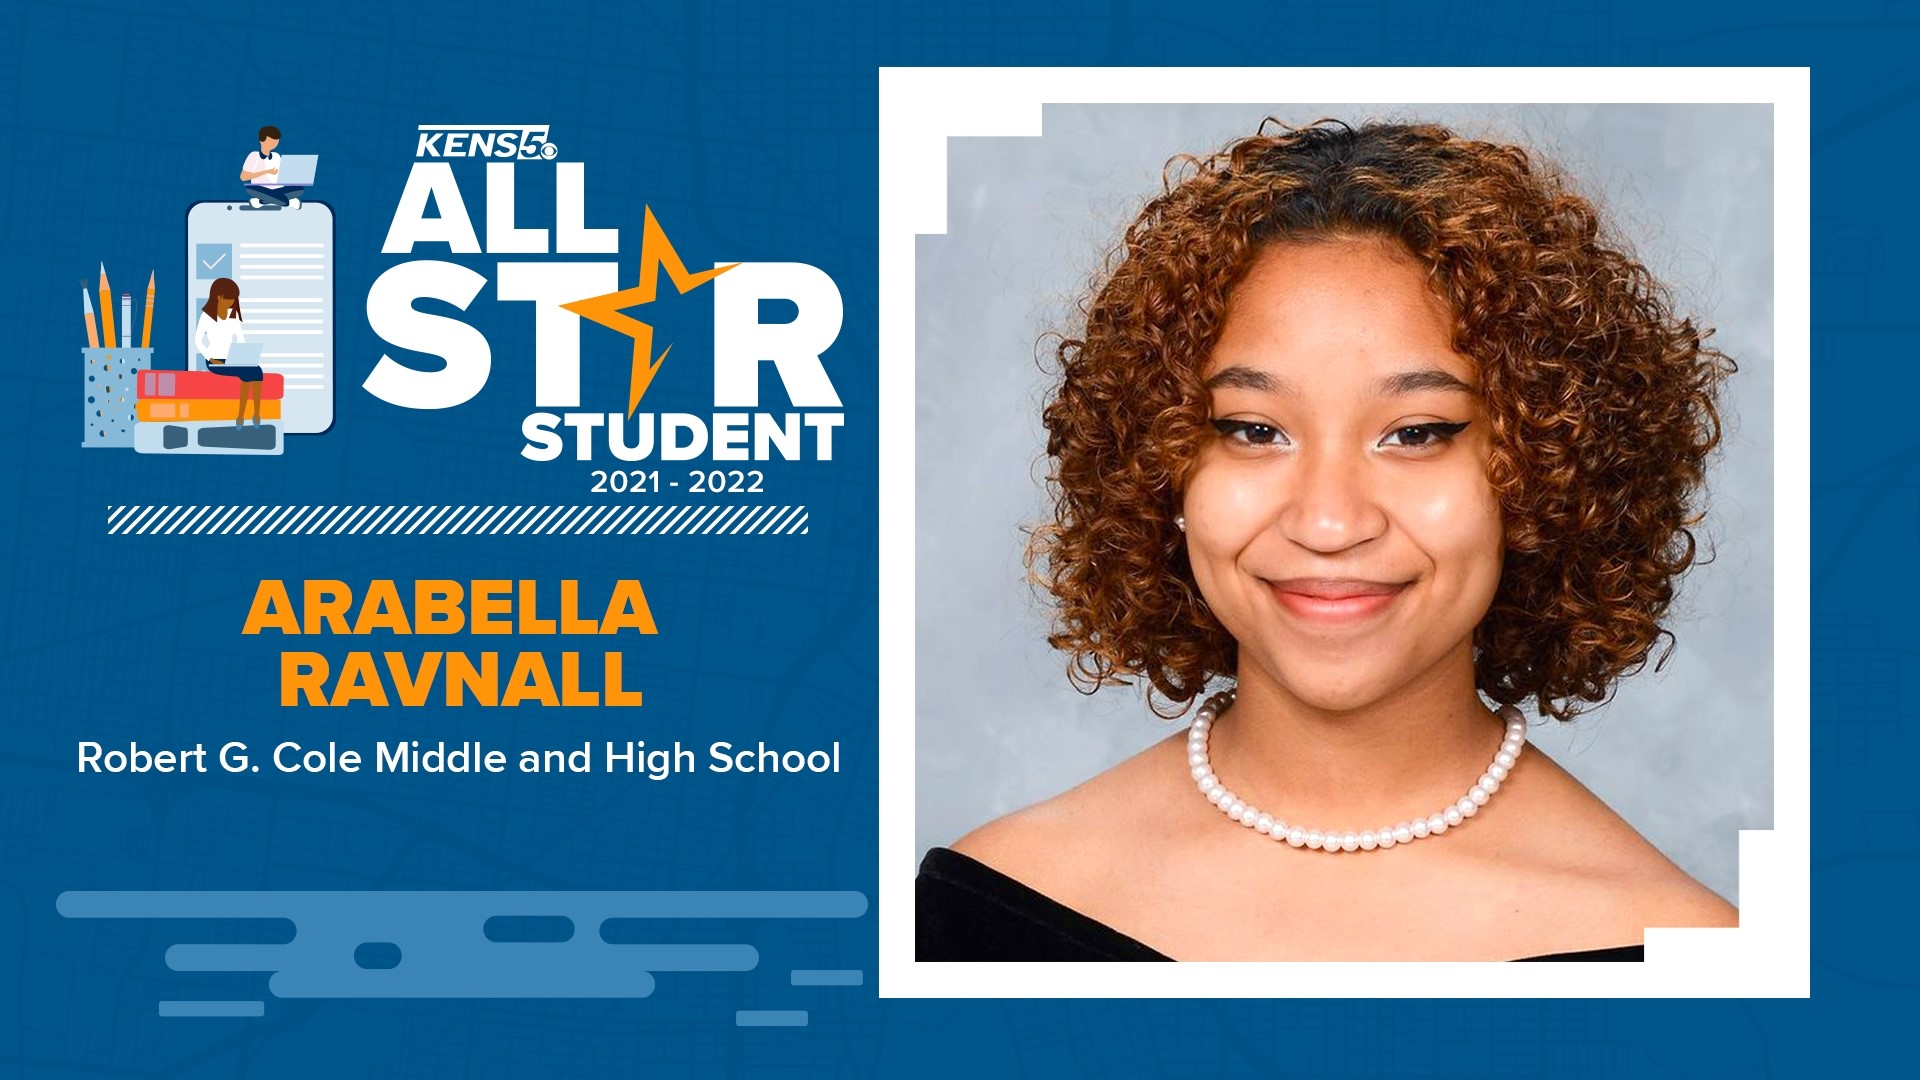 Robert G. Cole High School student, Arabella Ravnall is a KENS5 All-Star Student.